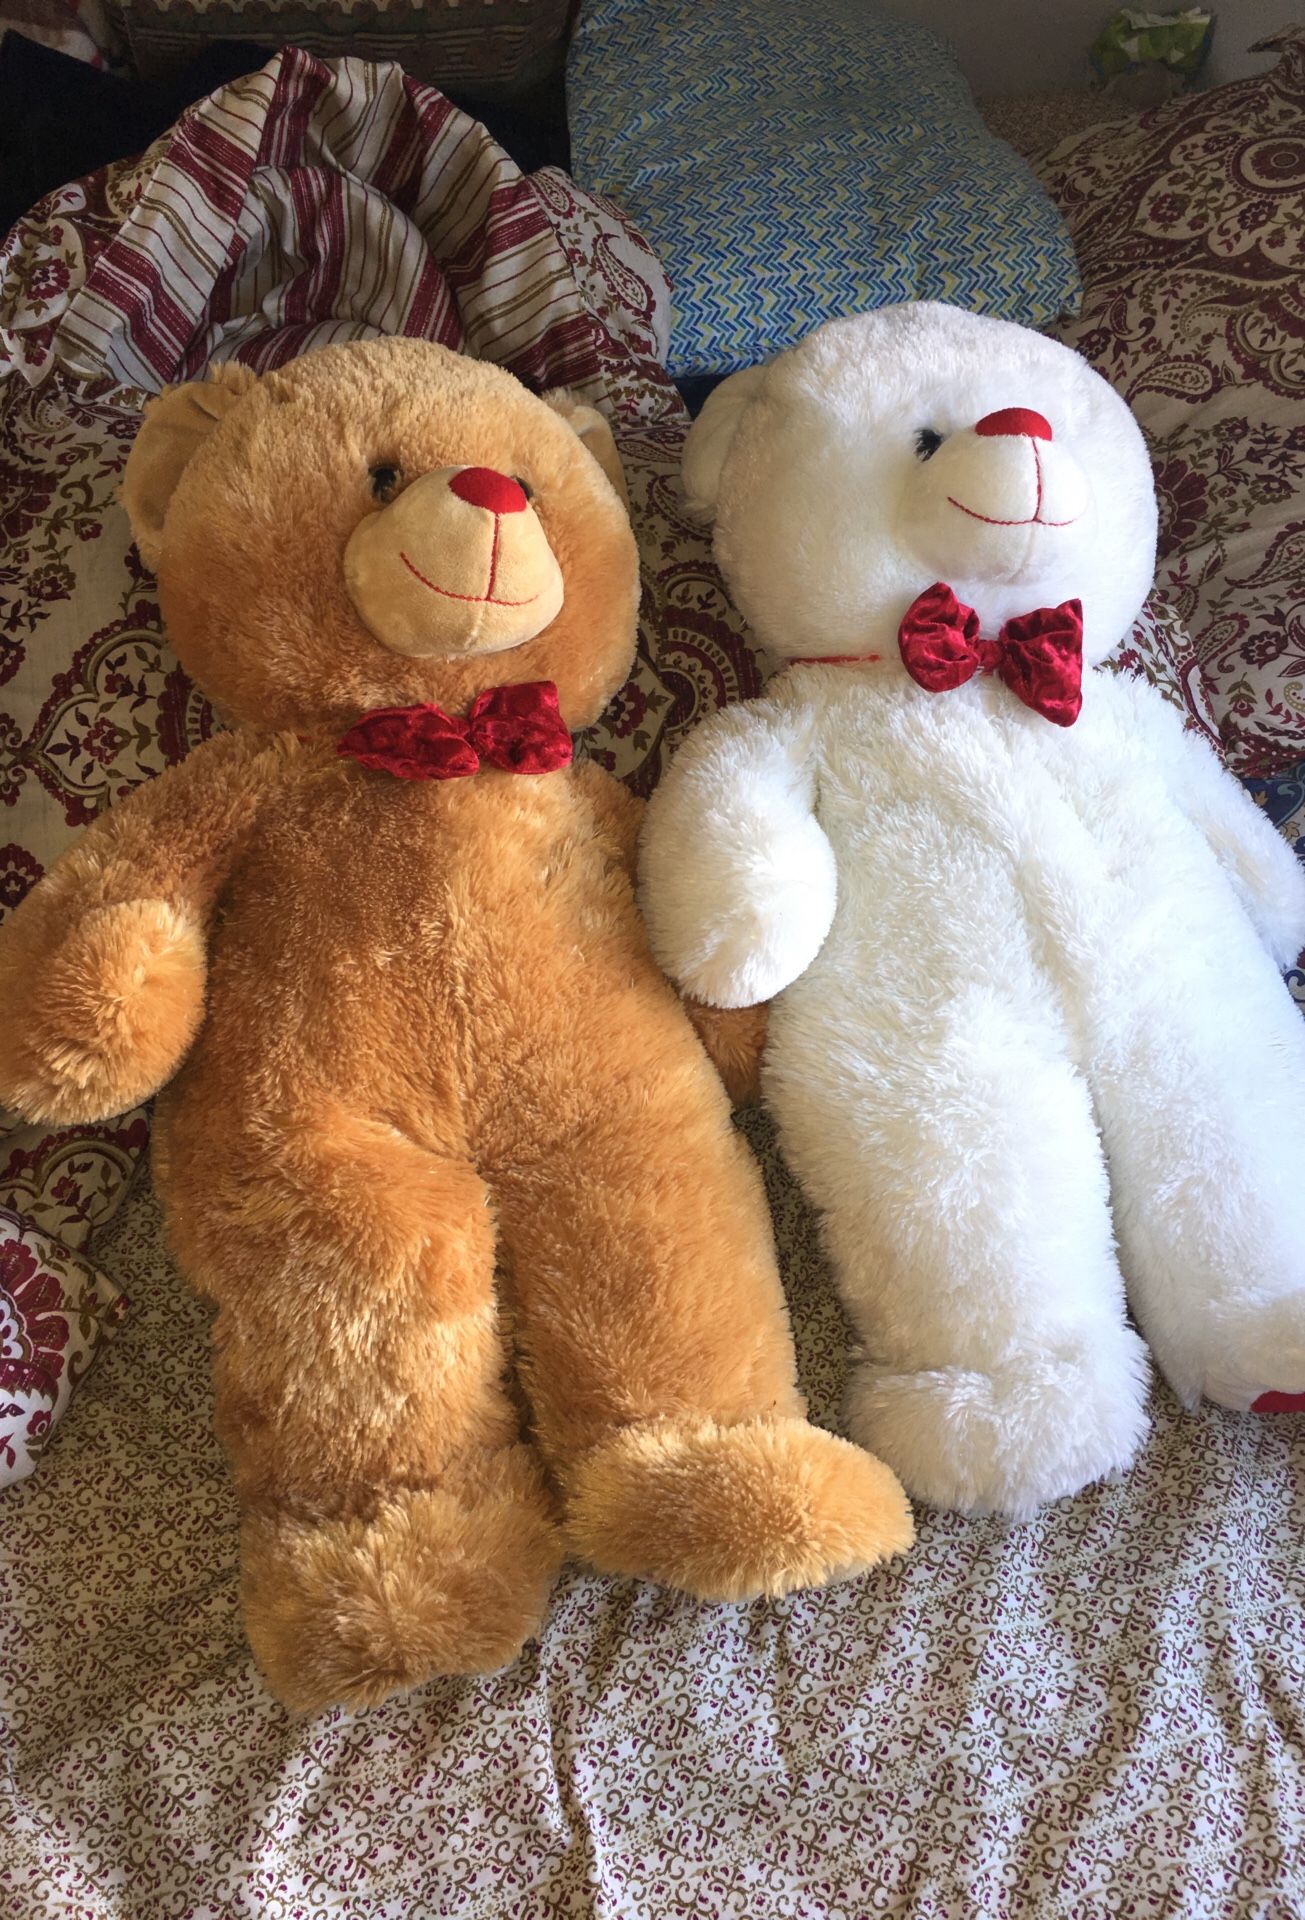 Stuffed teddy bears